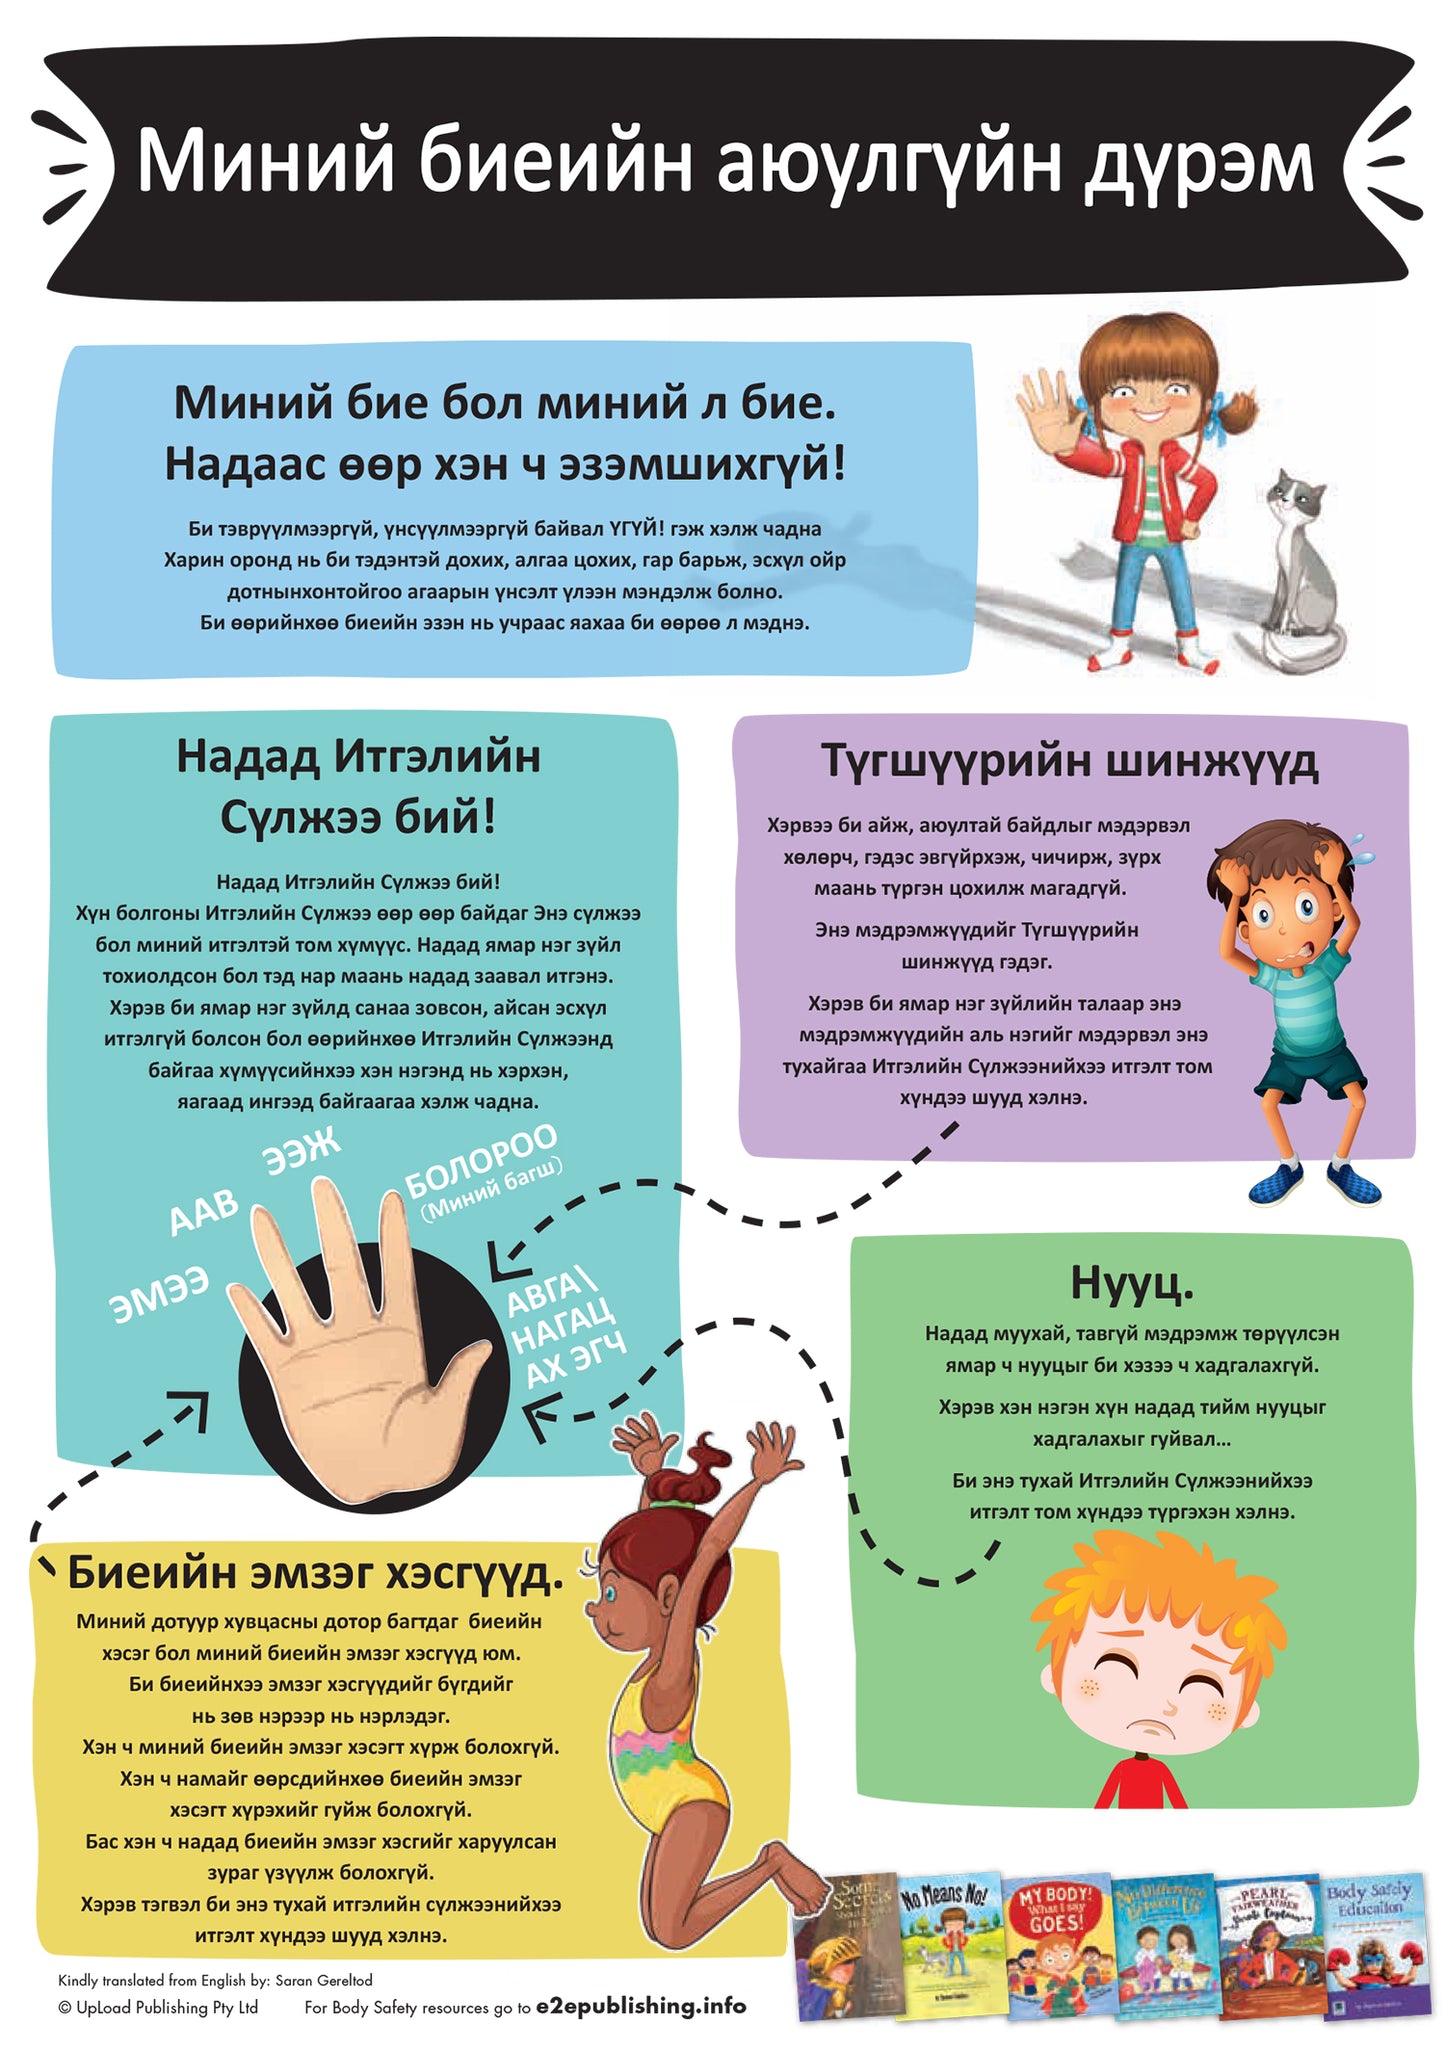 Body Safety Rules poster for children, written in Mongolian.